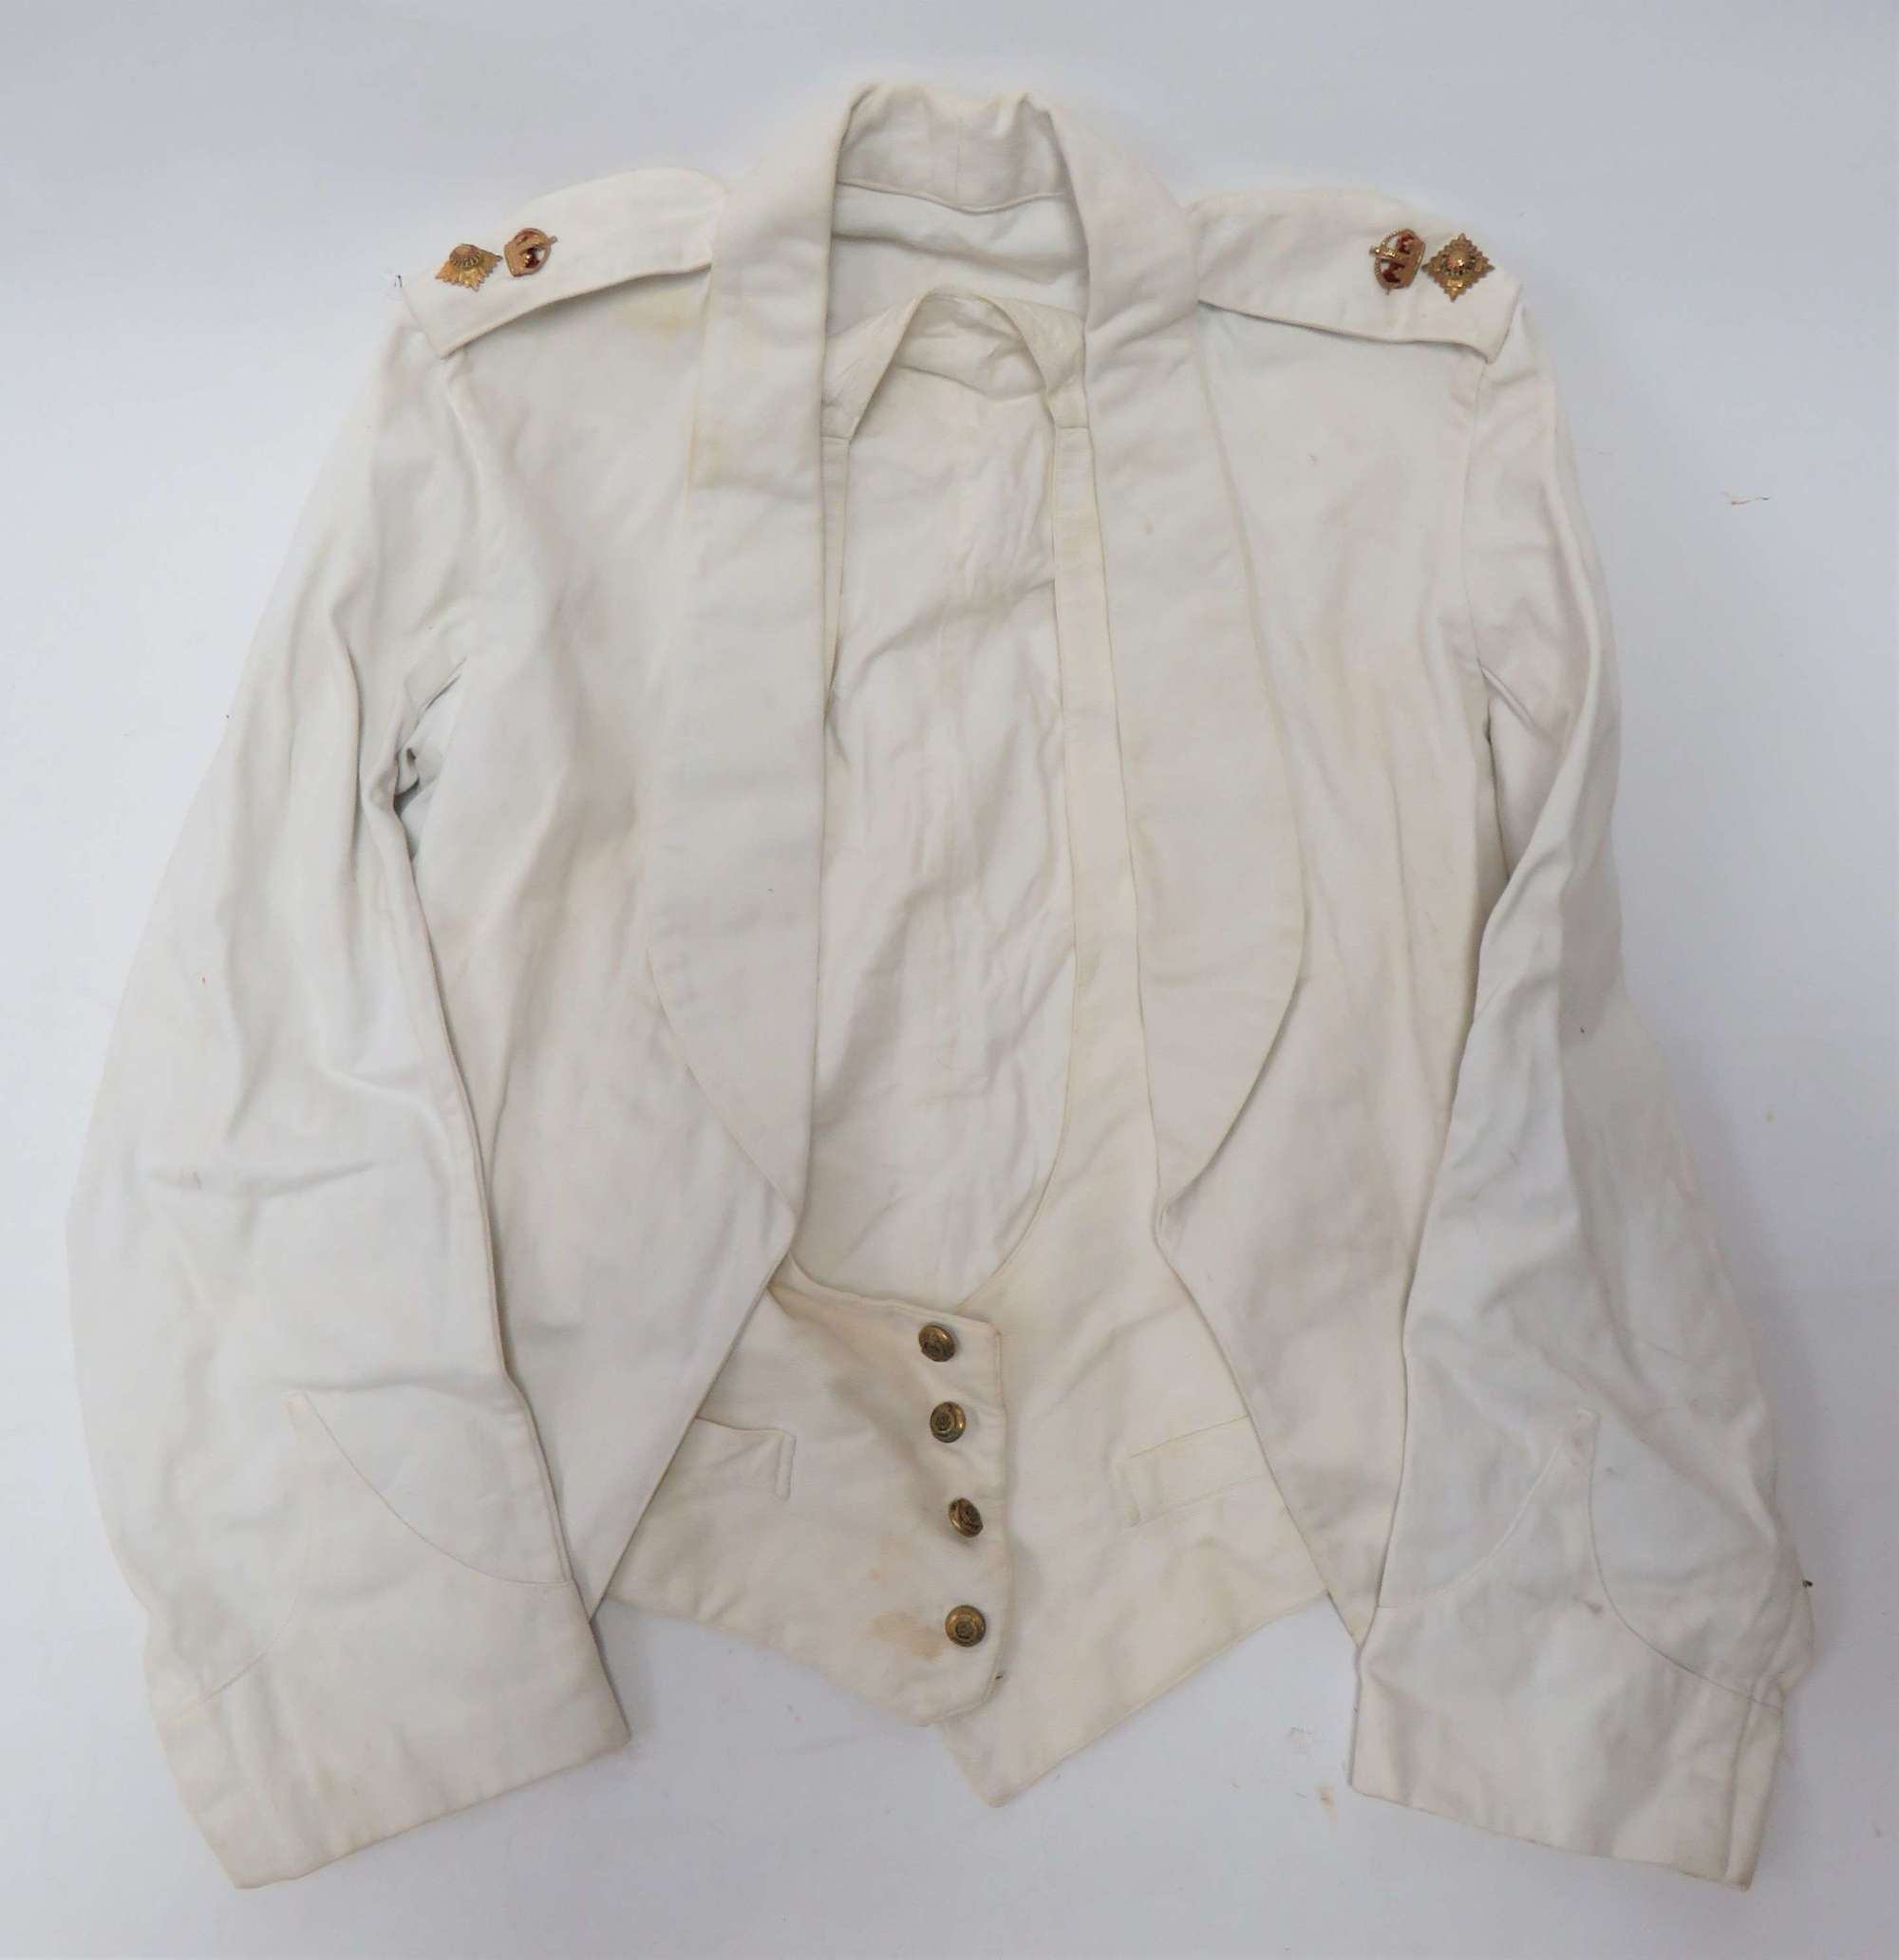 Post 1901 Royal Engineers Summer Pattern Mess Jacket and Waistcoat